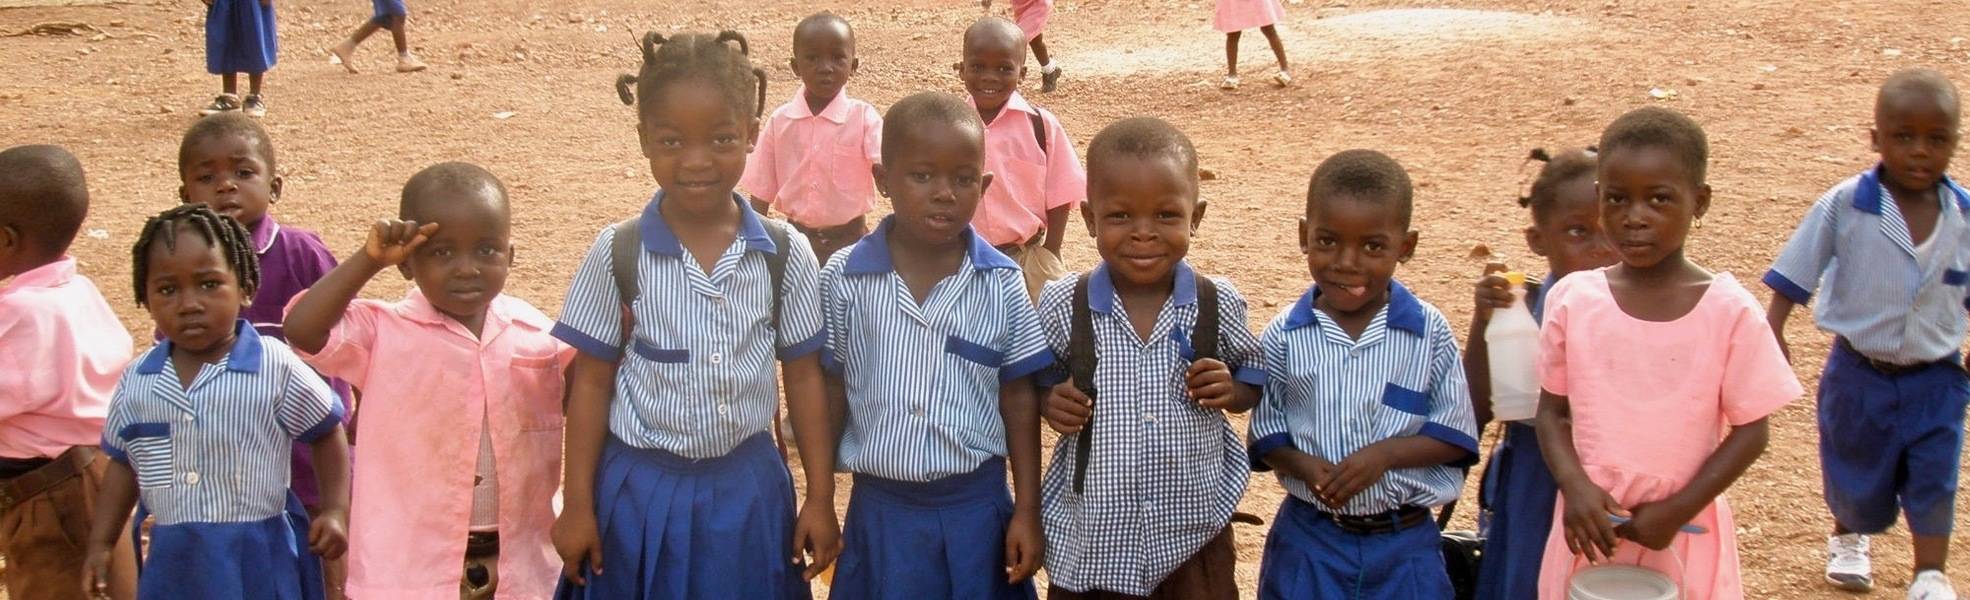 Freiwilligenarbeit in Ghana in der Kinderbetreuung